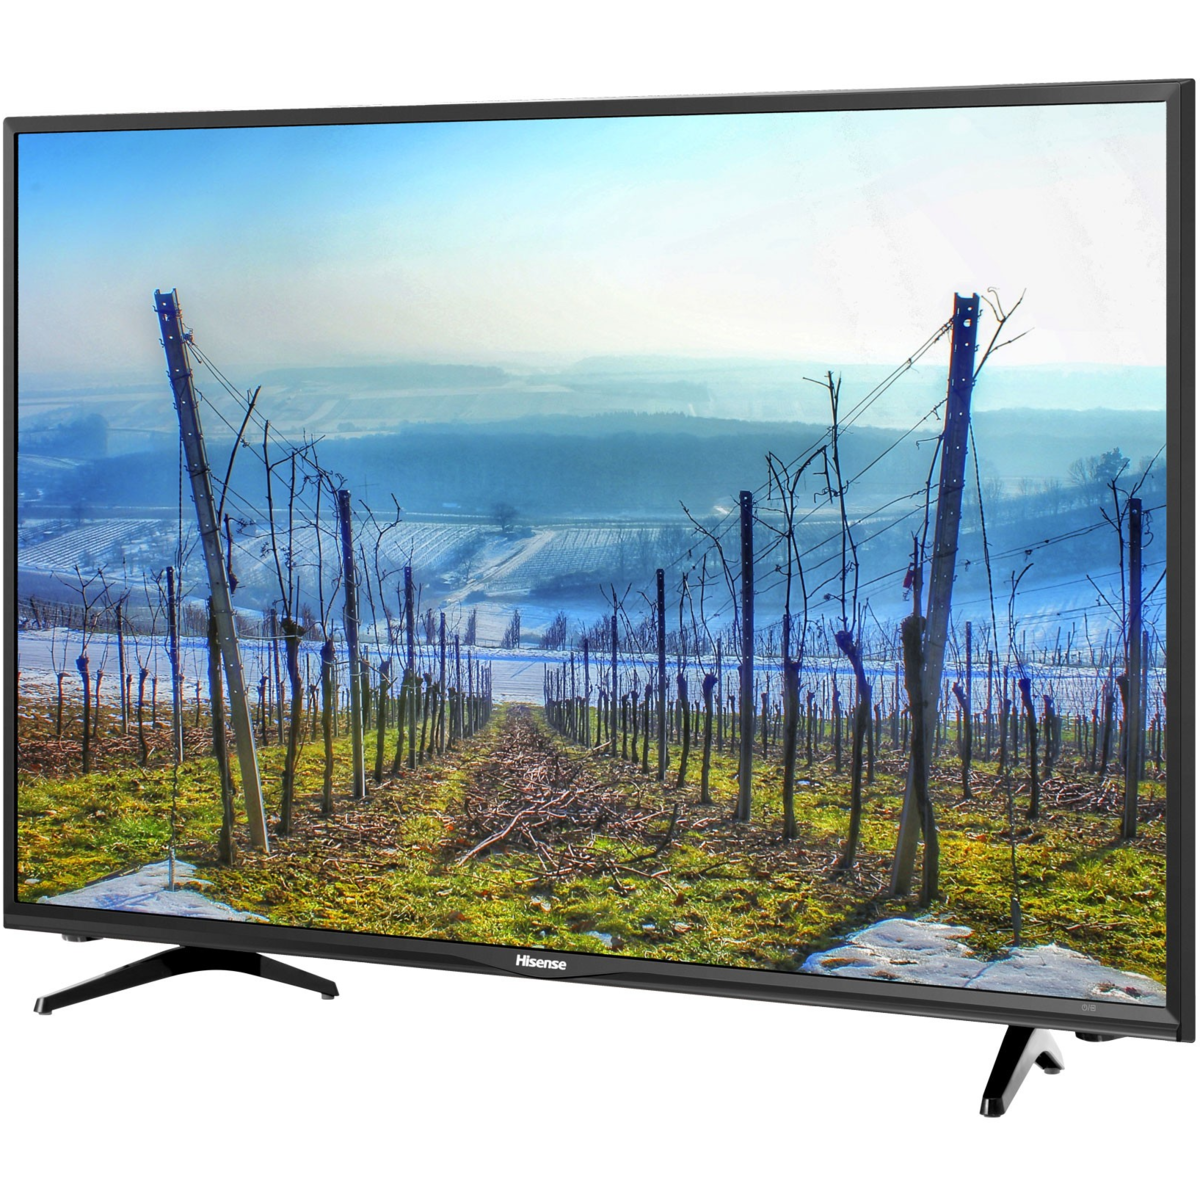 Hisense Full HD Smart LED TV 40N2179PW 40inch